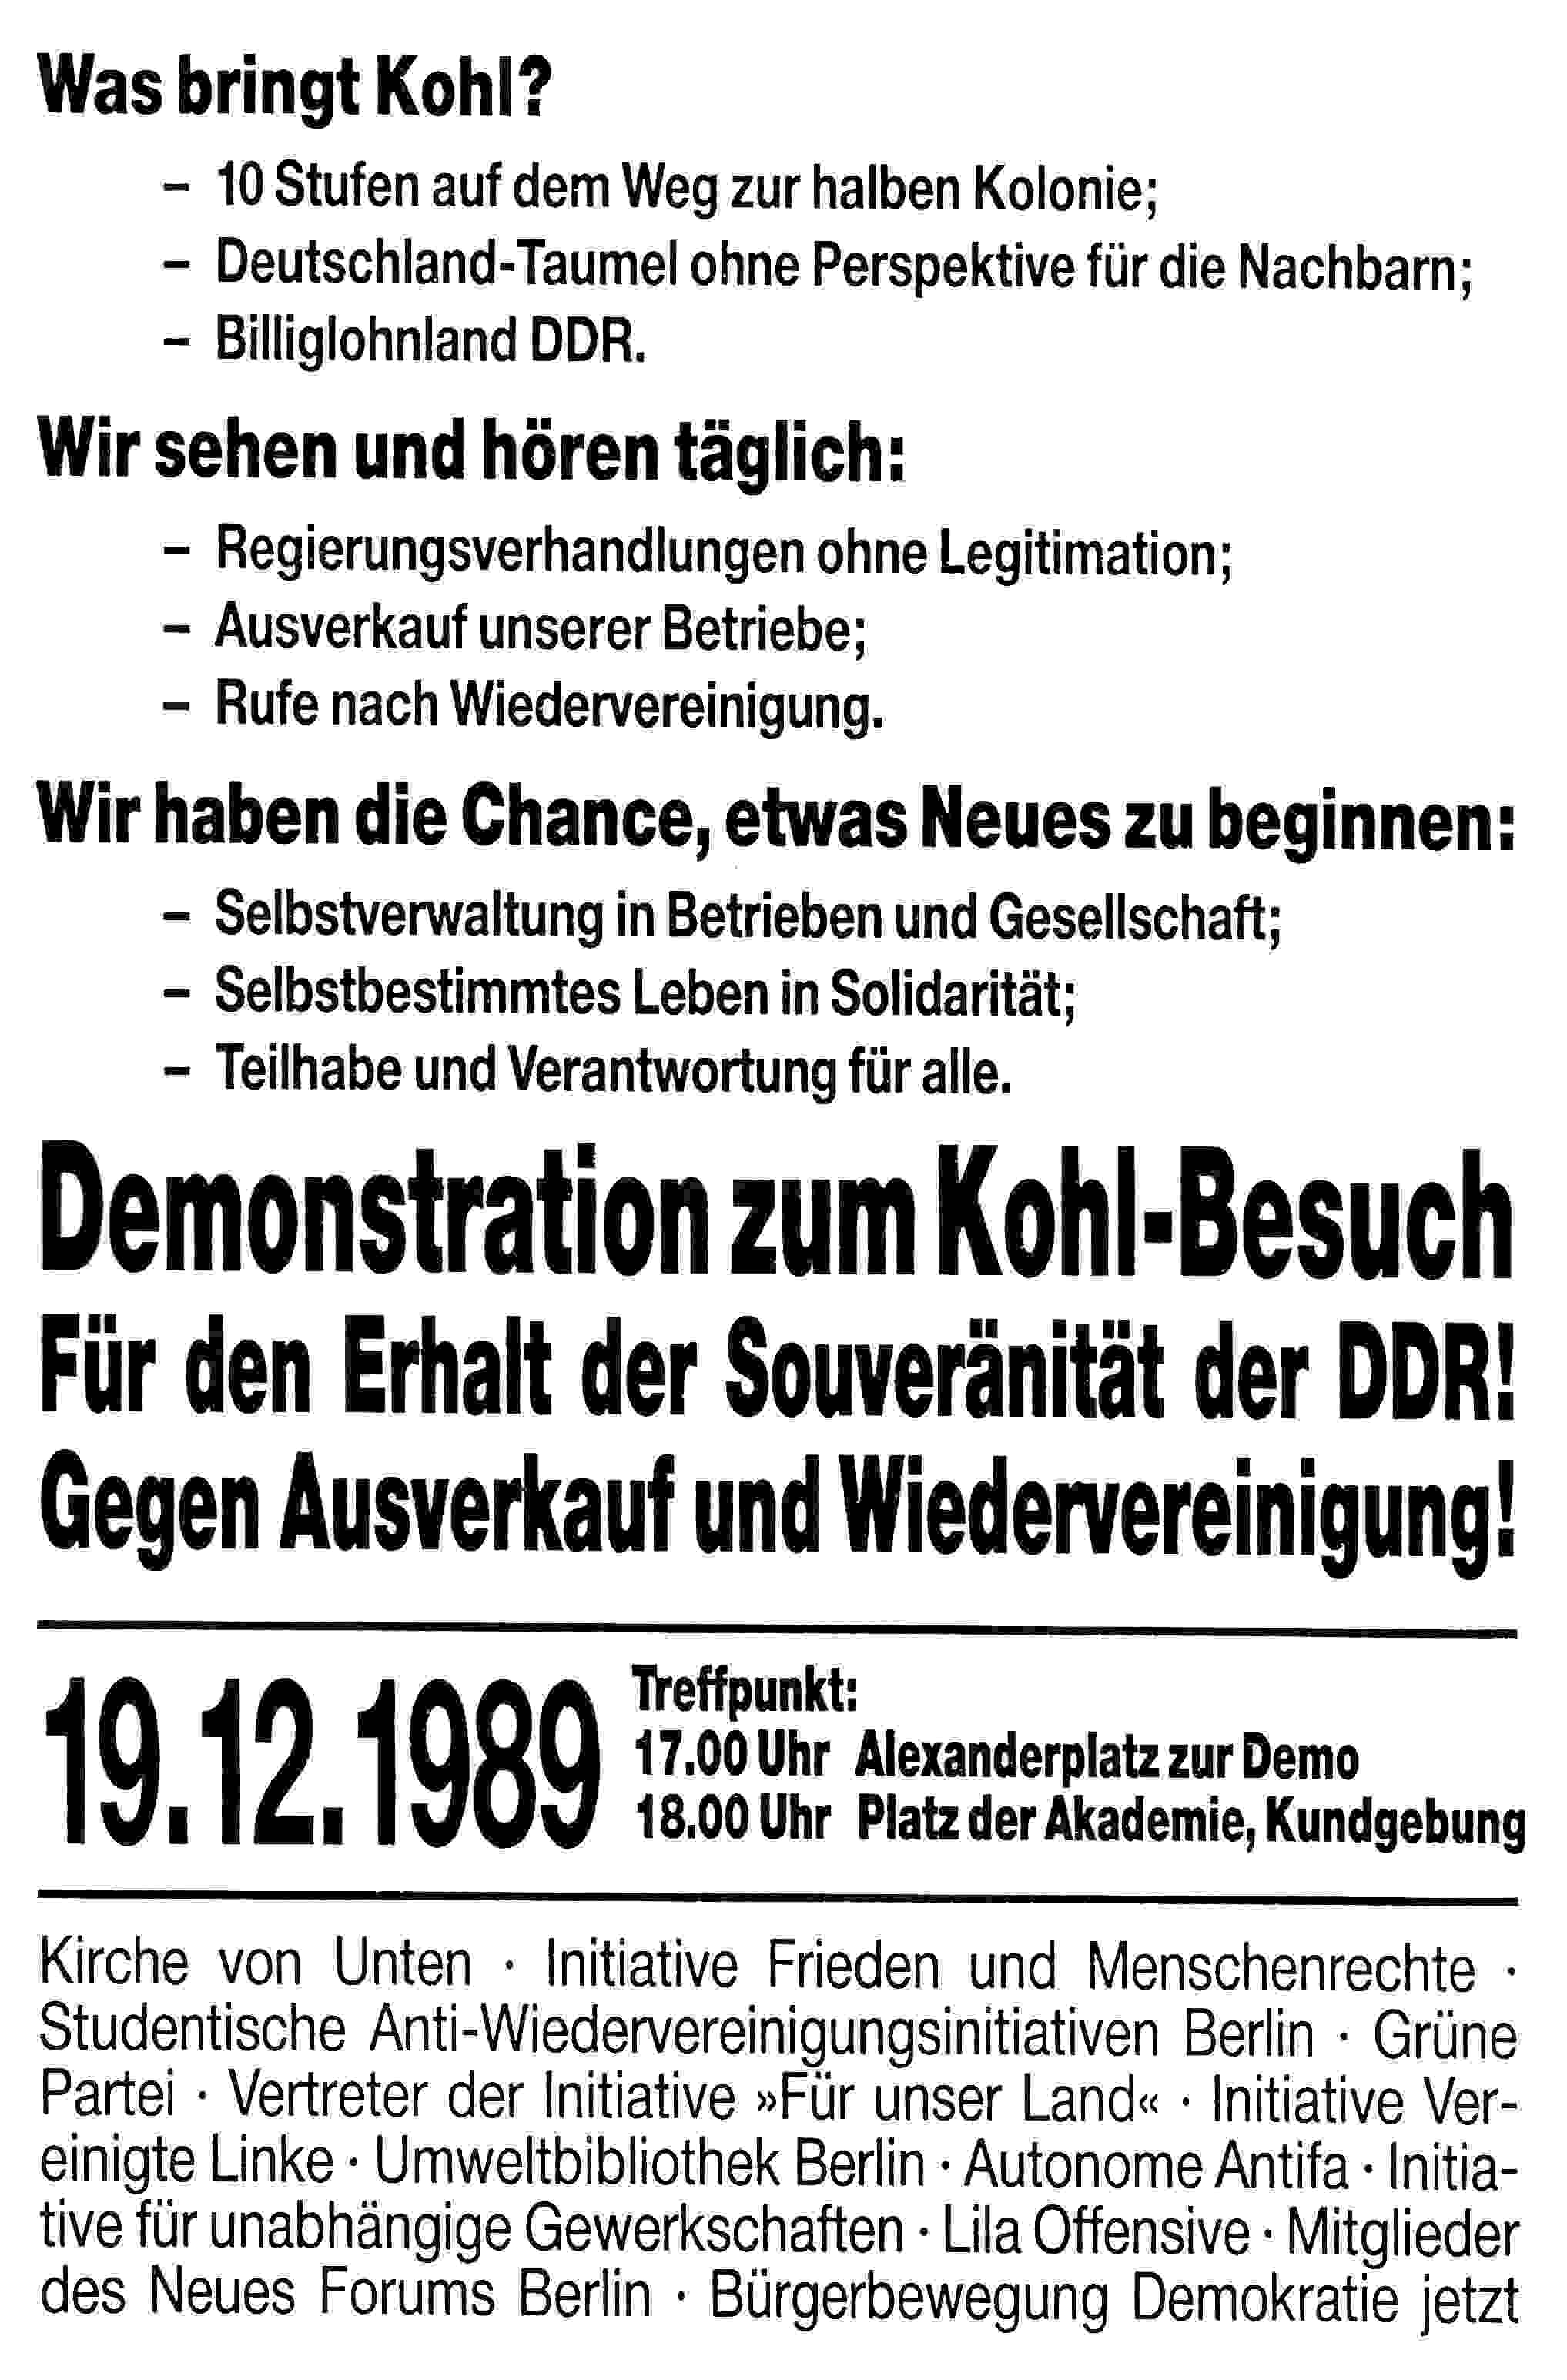 Demonstration in Berlin zum Kohlbesuch in Dresden